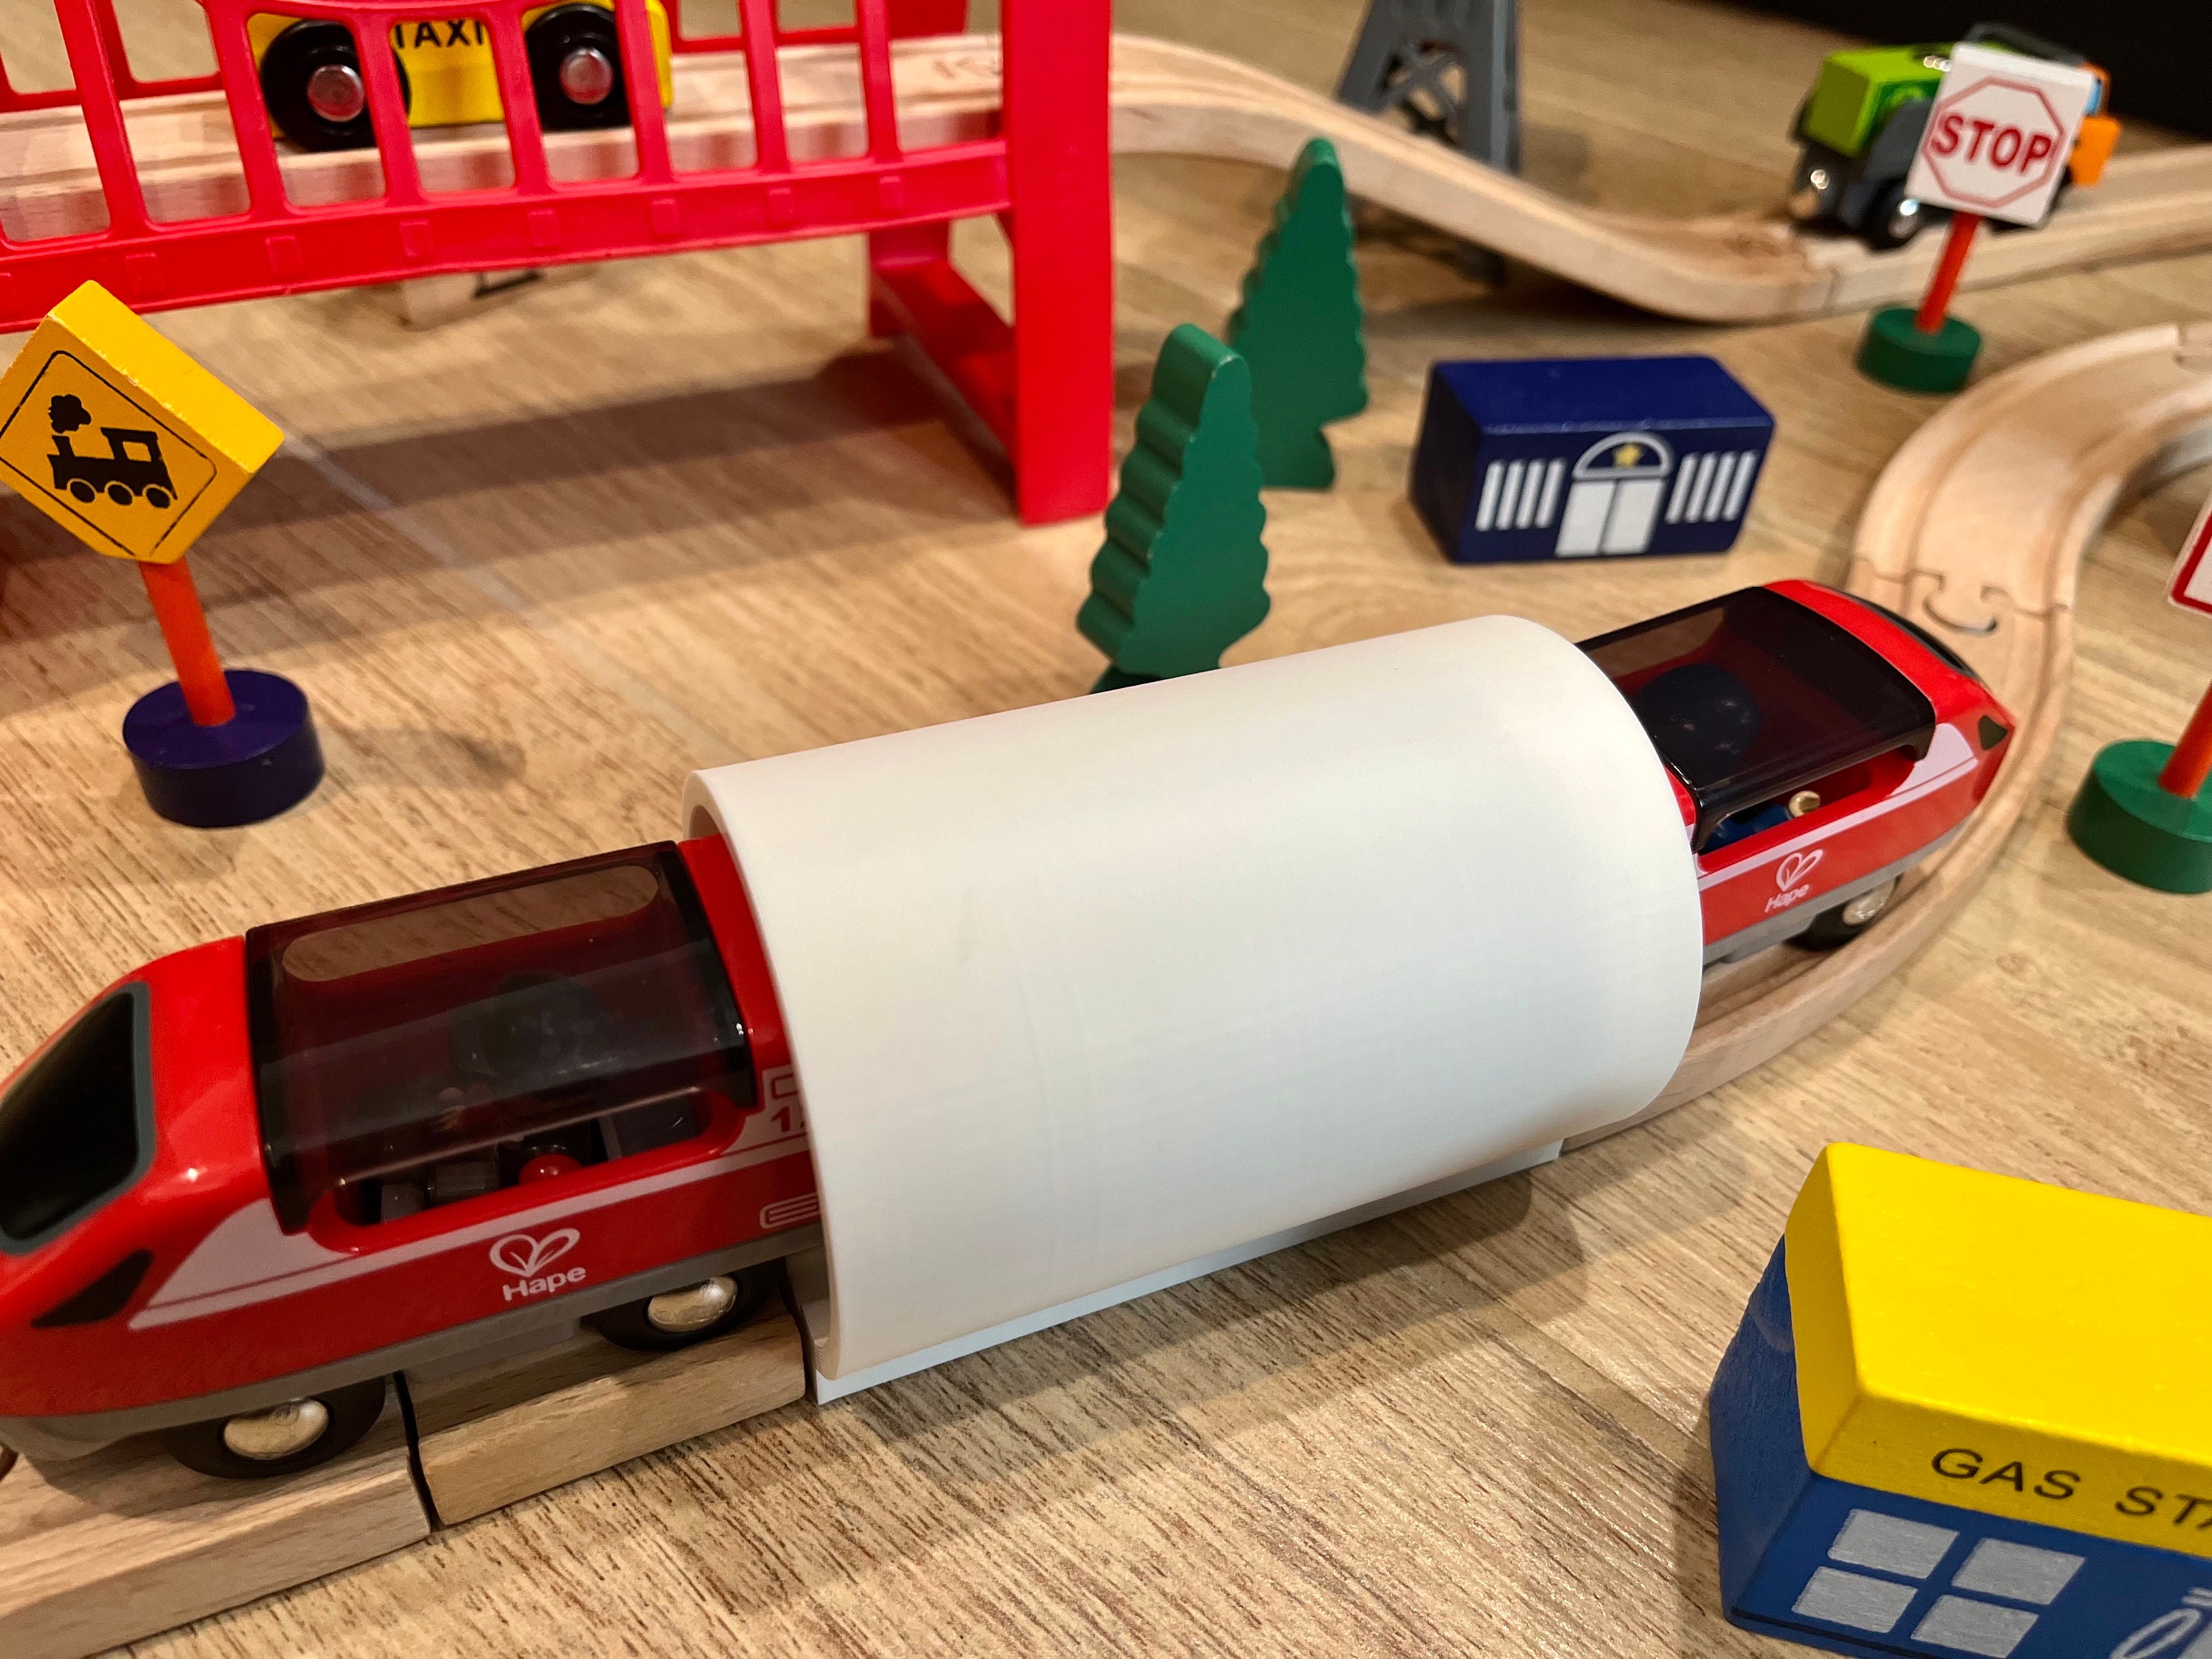 Train Tunnel for Wooden Train Tracks. Compatible With Brio, Thomas the Train,  Hape, and IKEA Trains. Montessori Toys for Kids, Pretend Play 